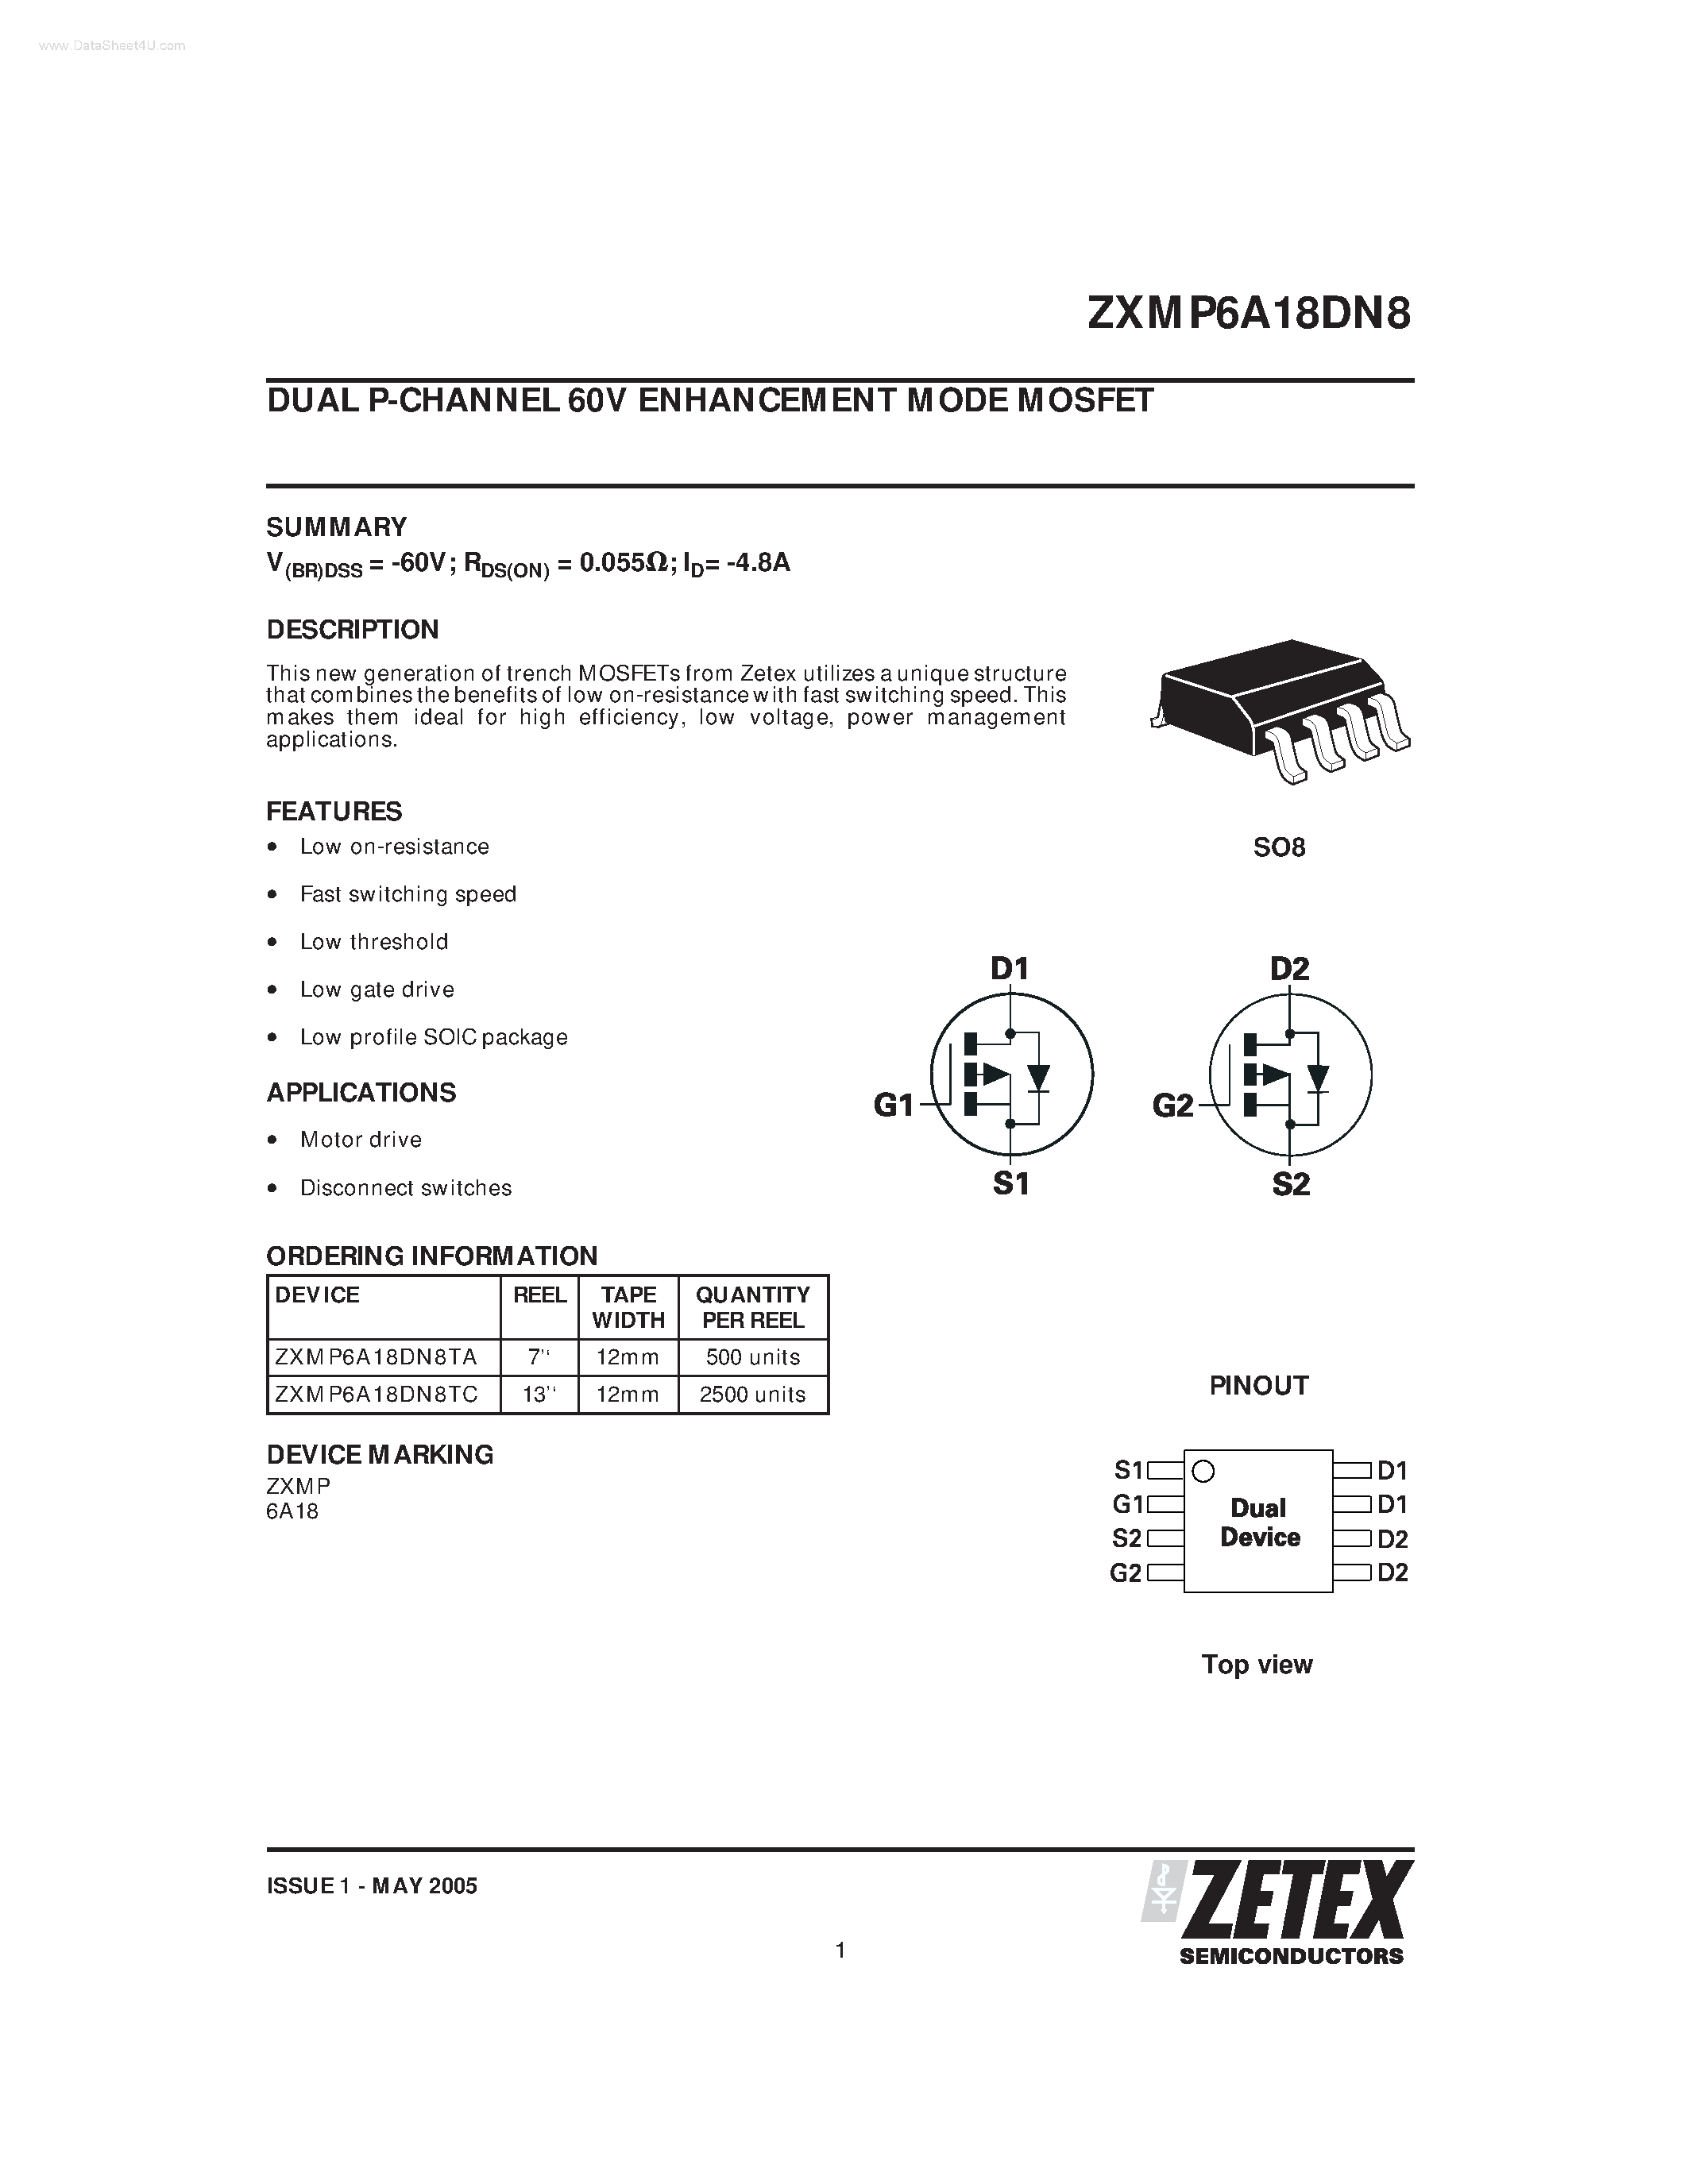 Datasheet ZXMP6A18DN8 - DUAL P-CHANNEL 60V ENHANCEMENT MODE MOSFET page 1